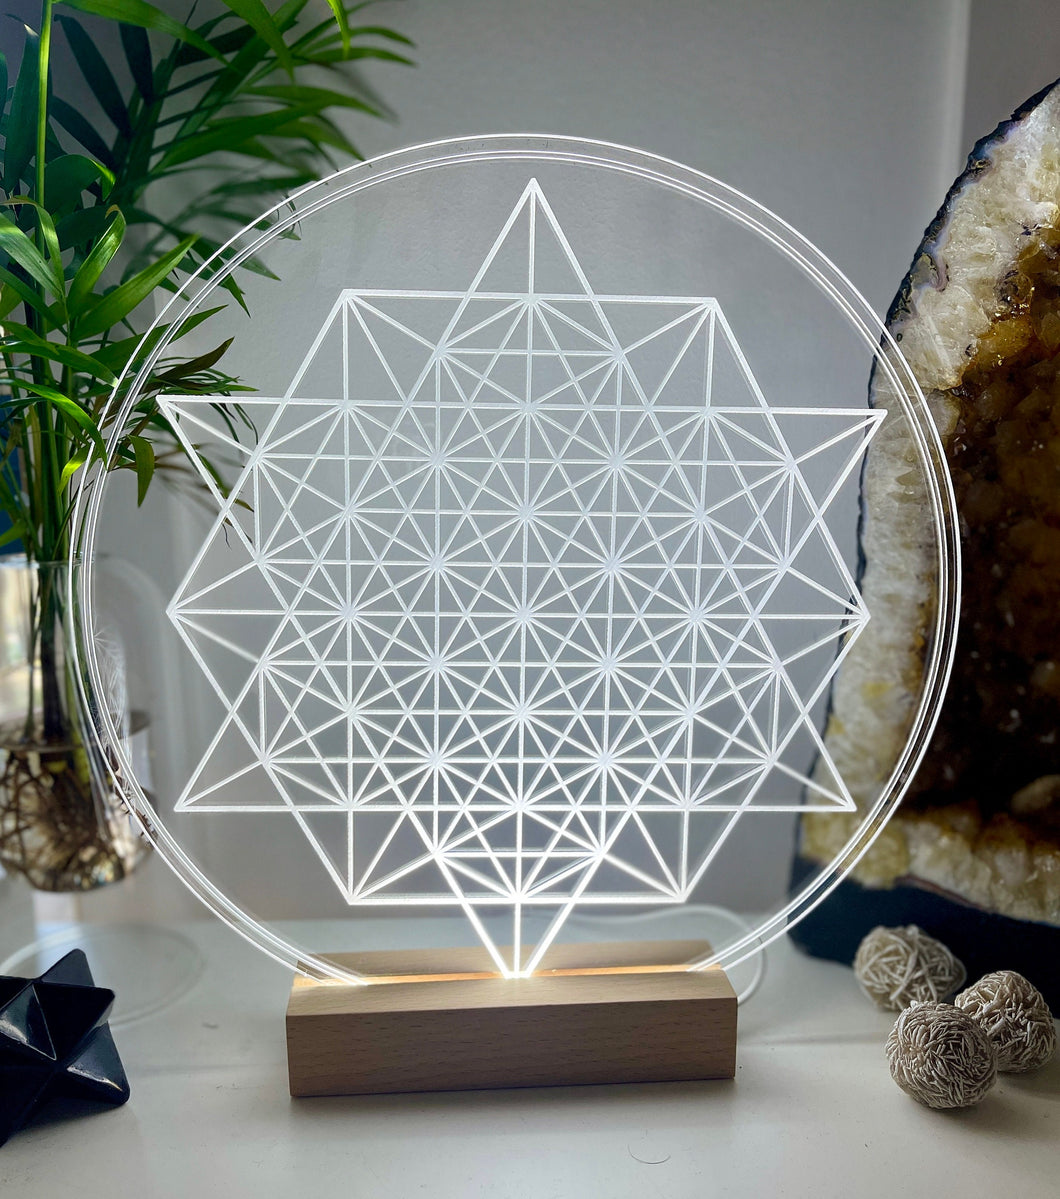 64 tetrahedron - LED light pattern Embrace this high vibrational pattern